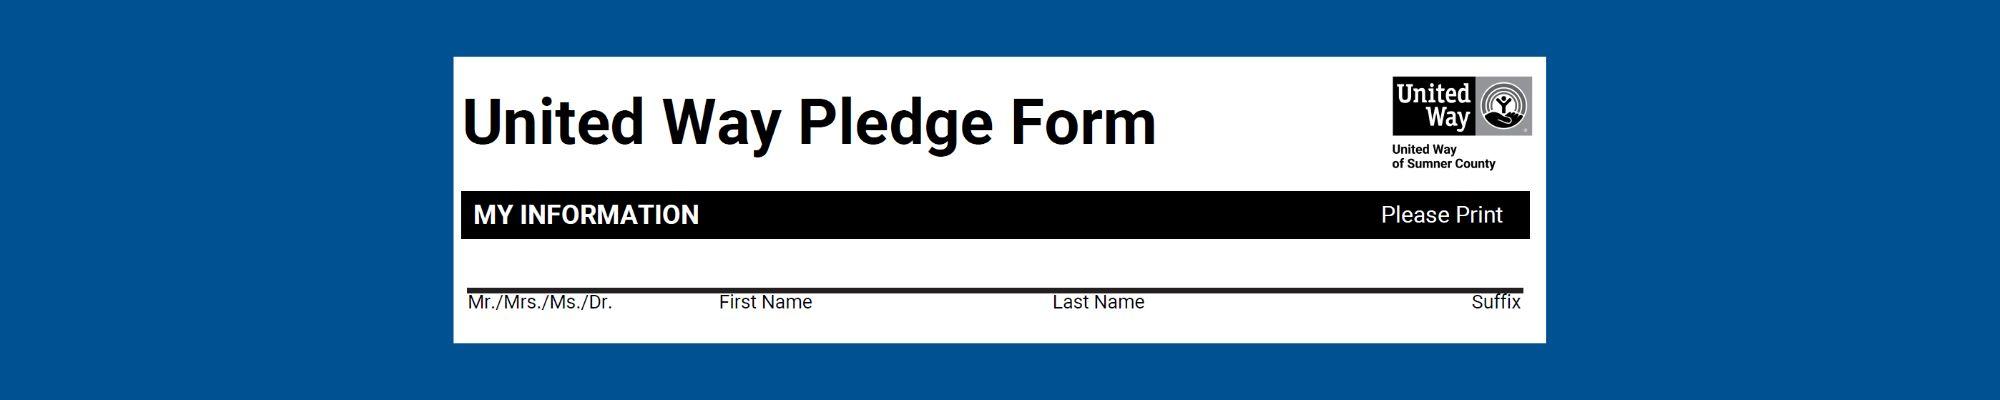 top of UWSC pledge form